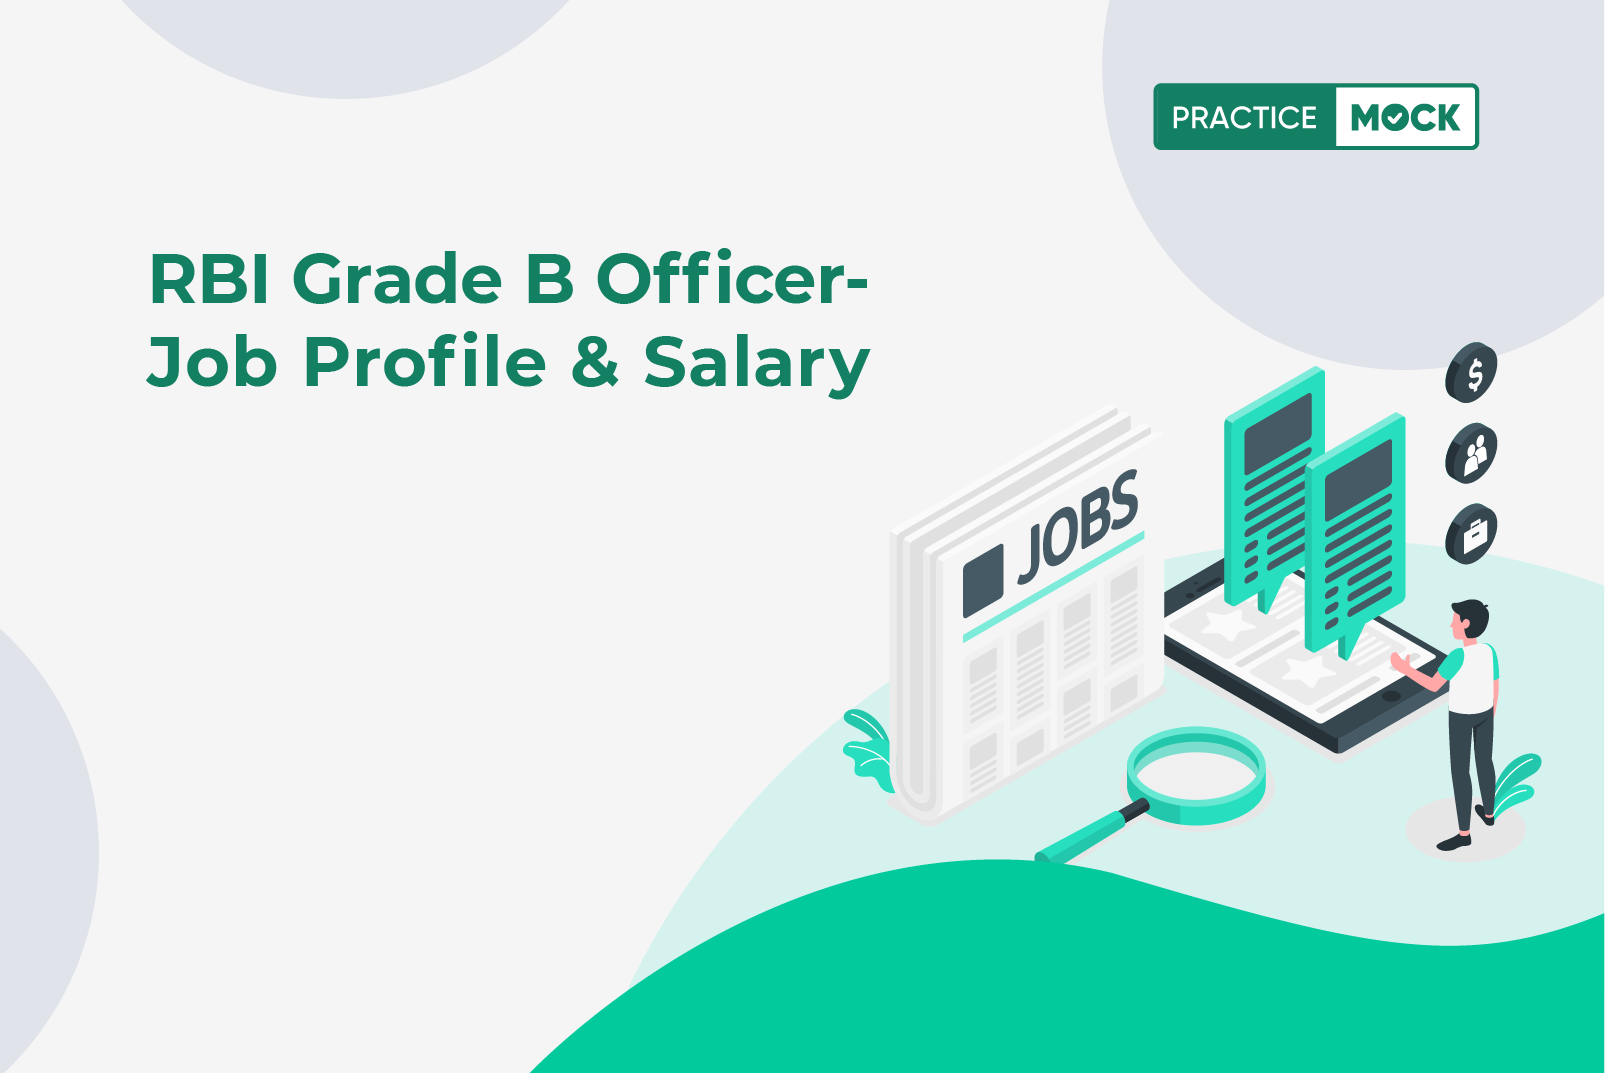 RBI Grade B Officer - Job Profile & Salary